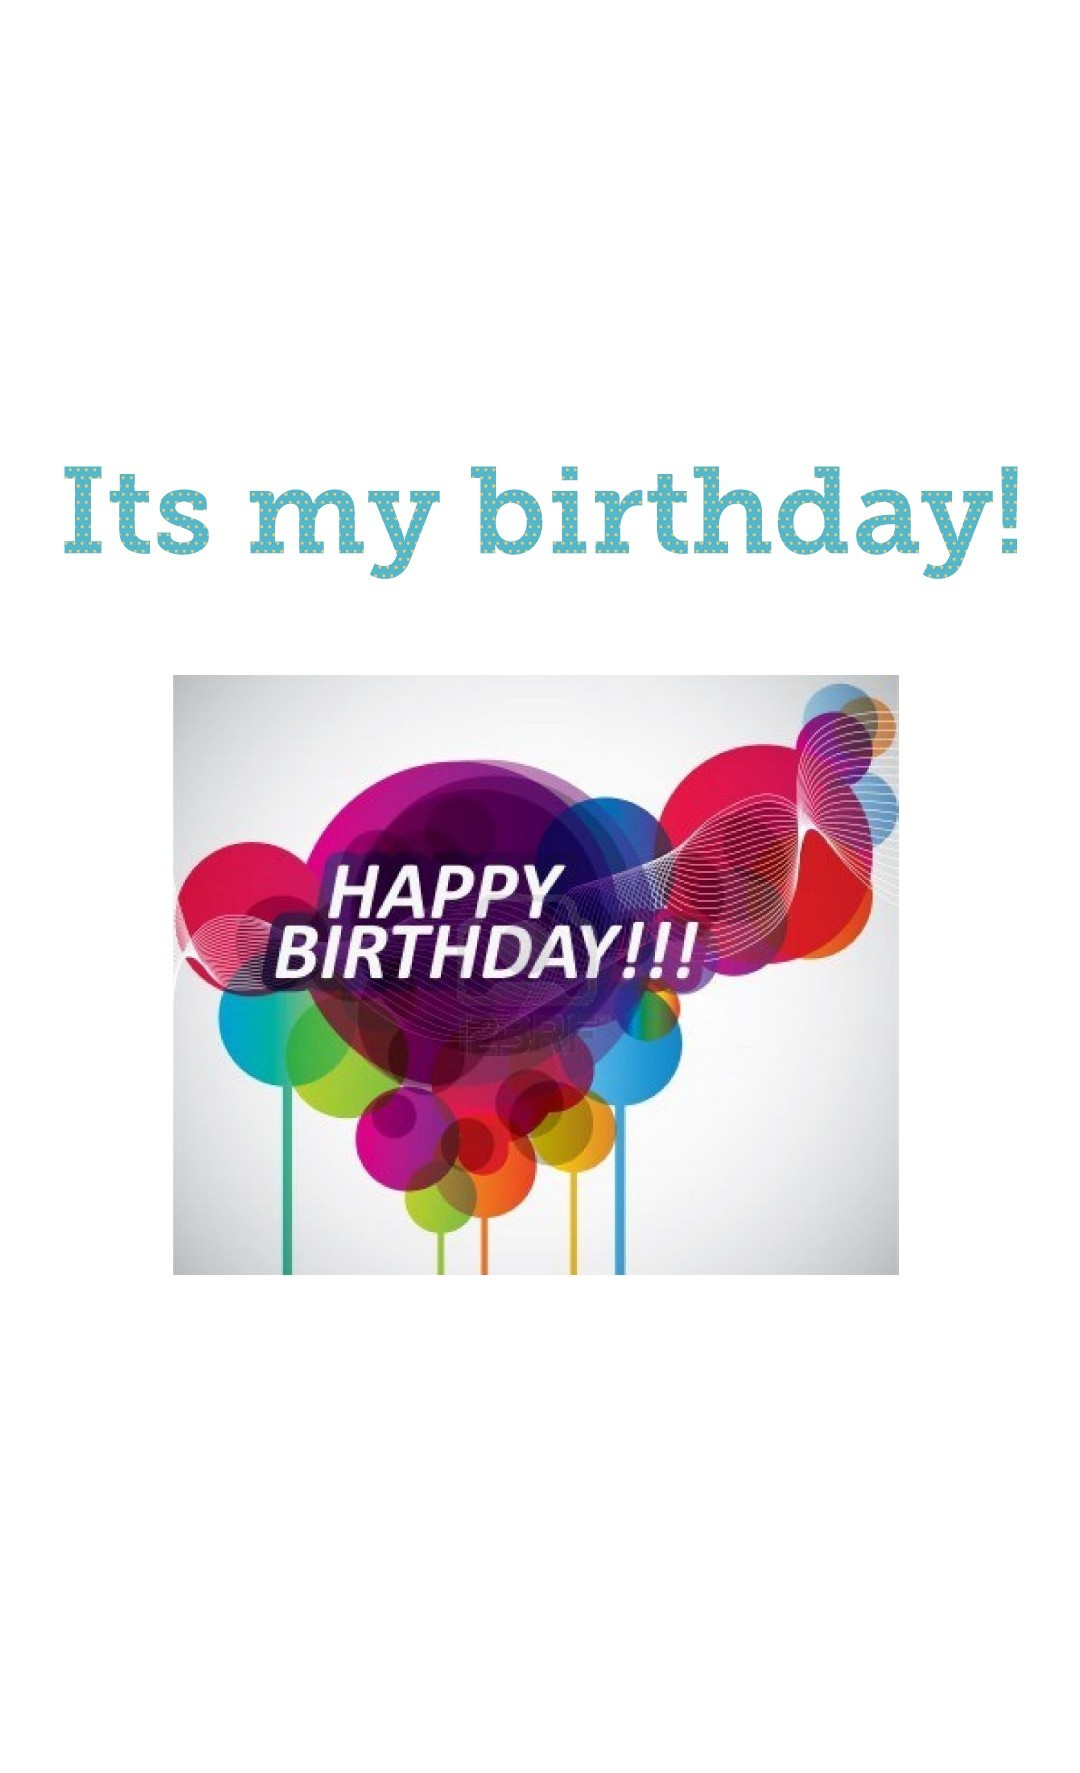 Its my birthday!